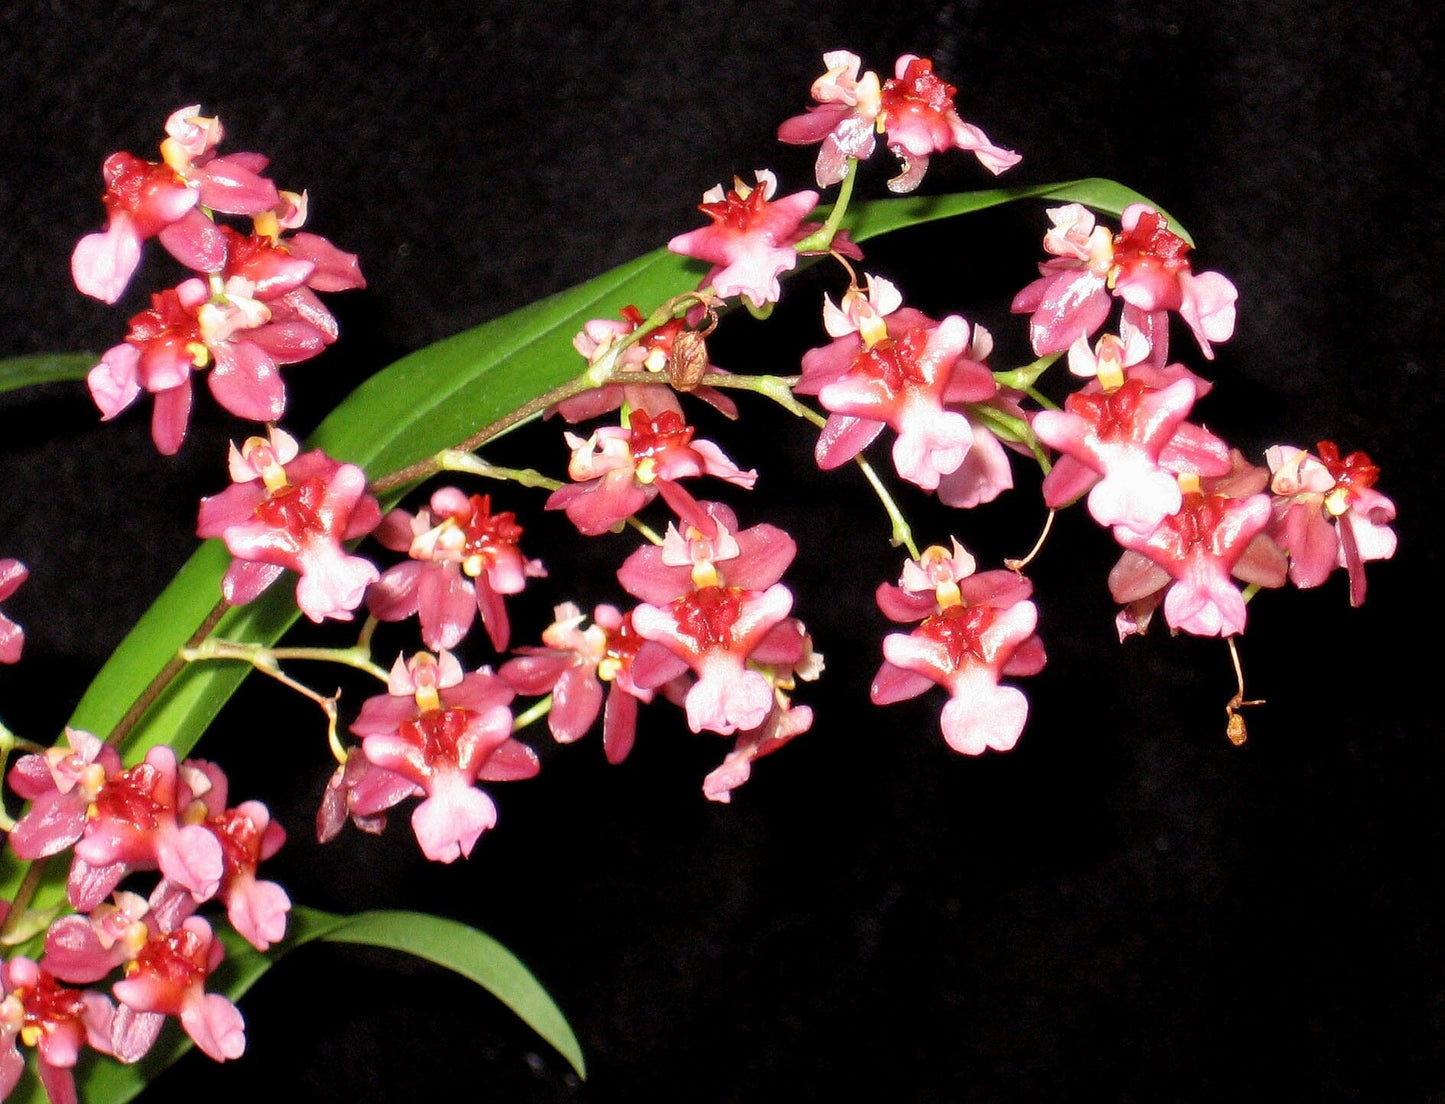 Oncidium Twinkle 'Pink Profusion' Oncidium La Foresta Orchids 